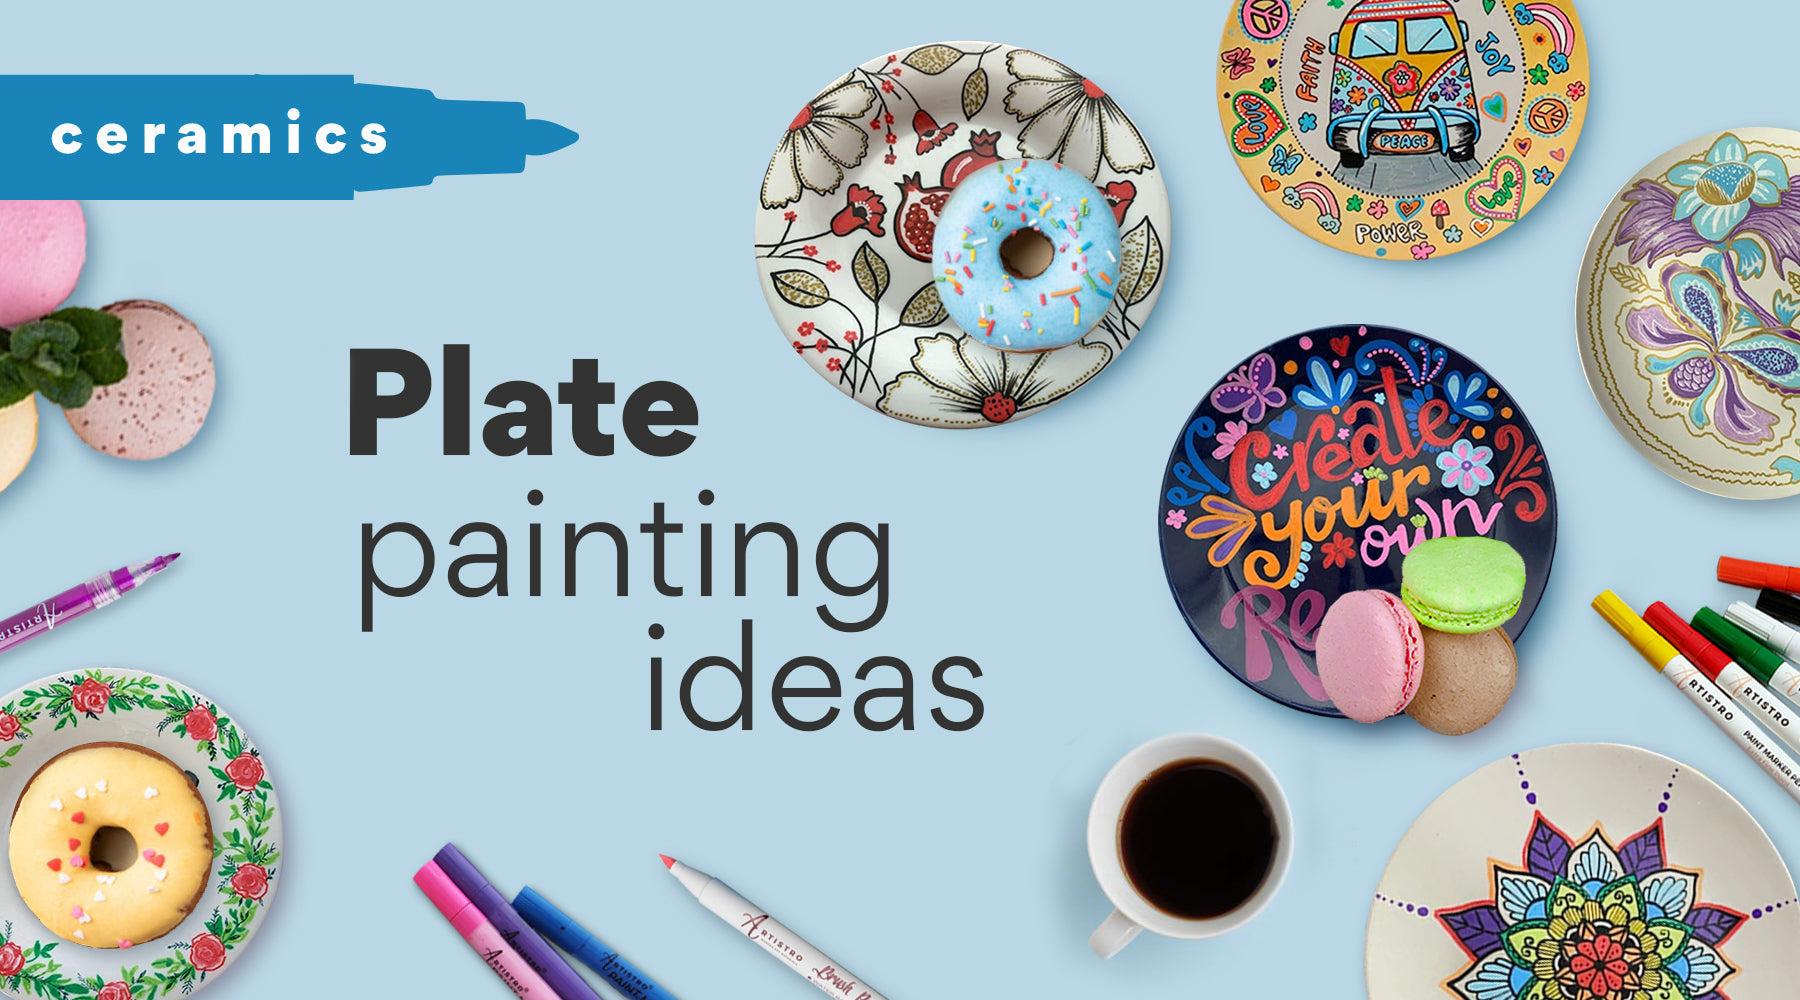 DIY Pottery Painting Kit, Cupcake Dish Ceramic Art Kits for Kids